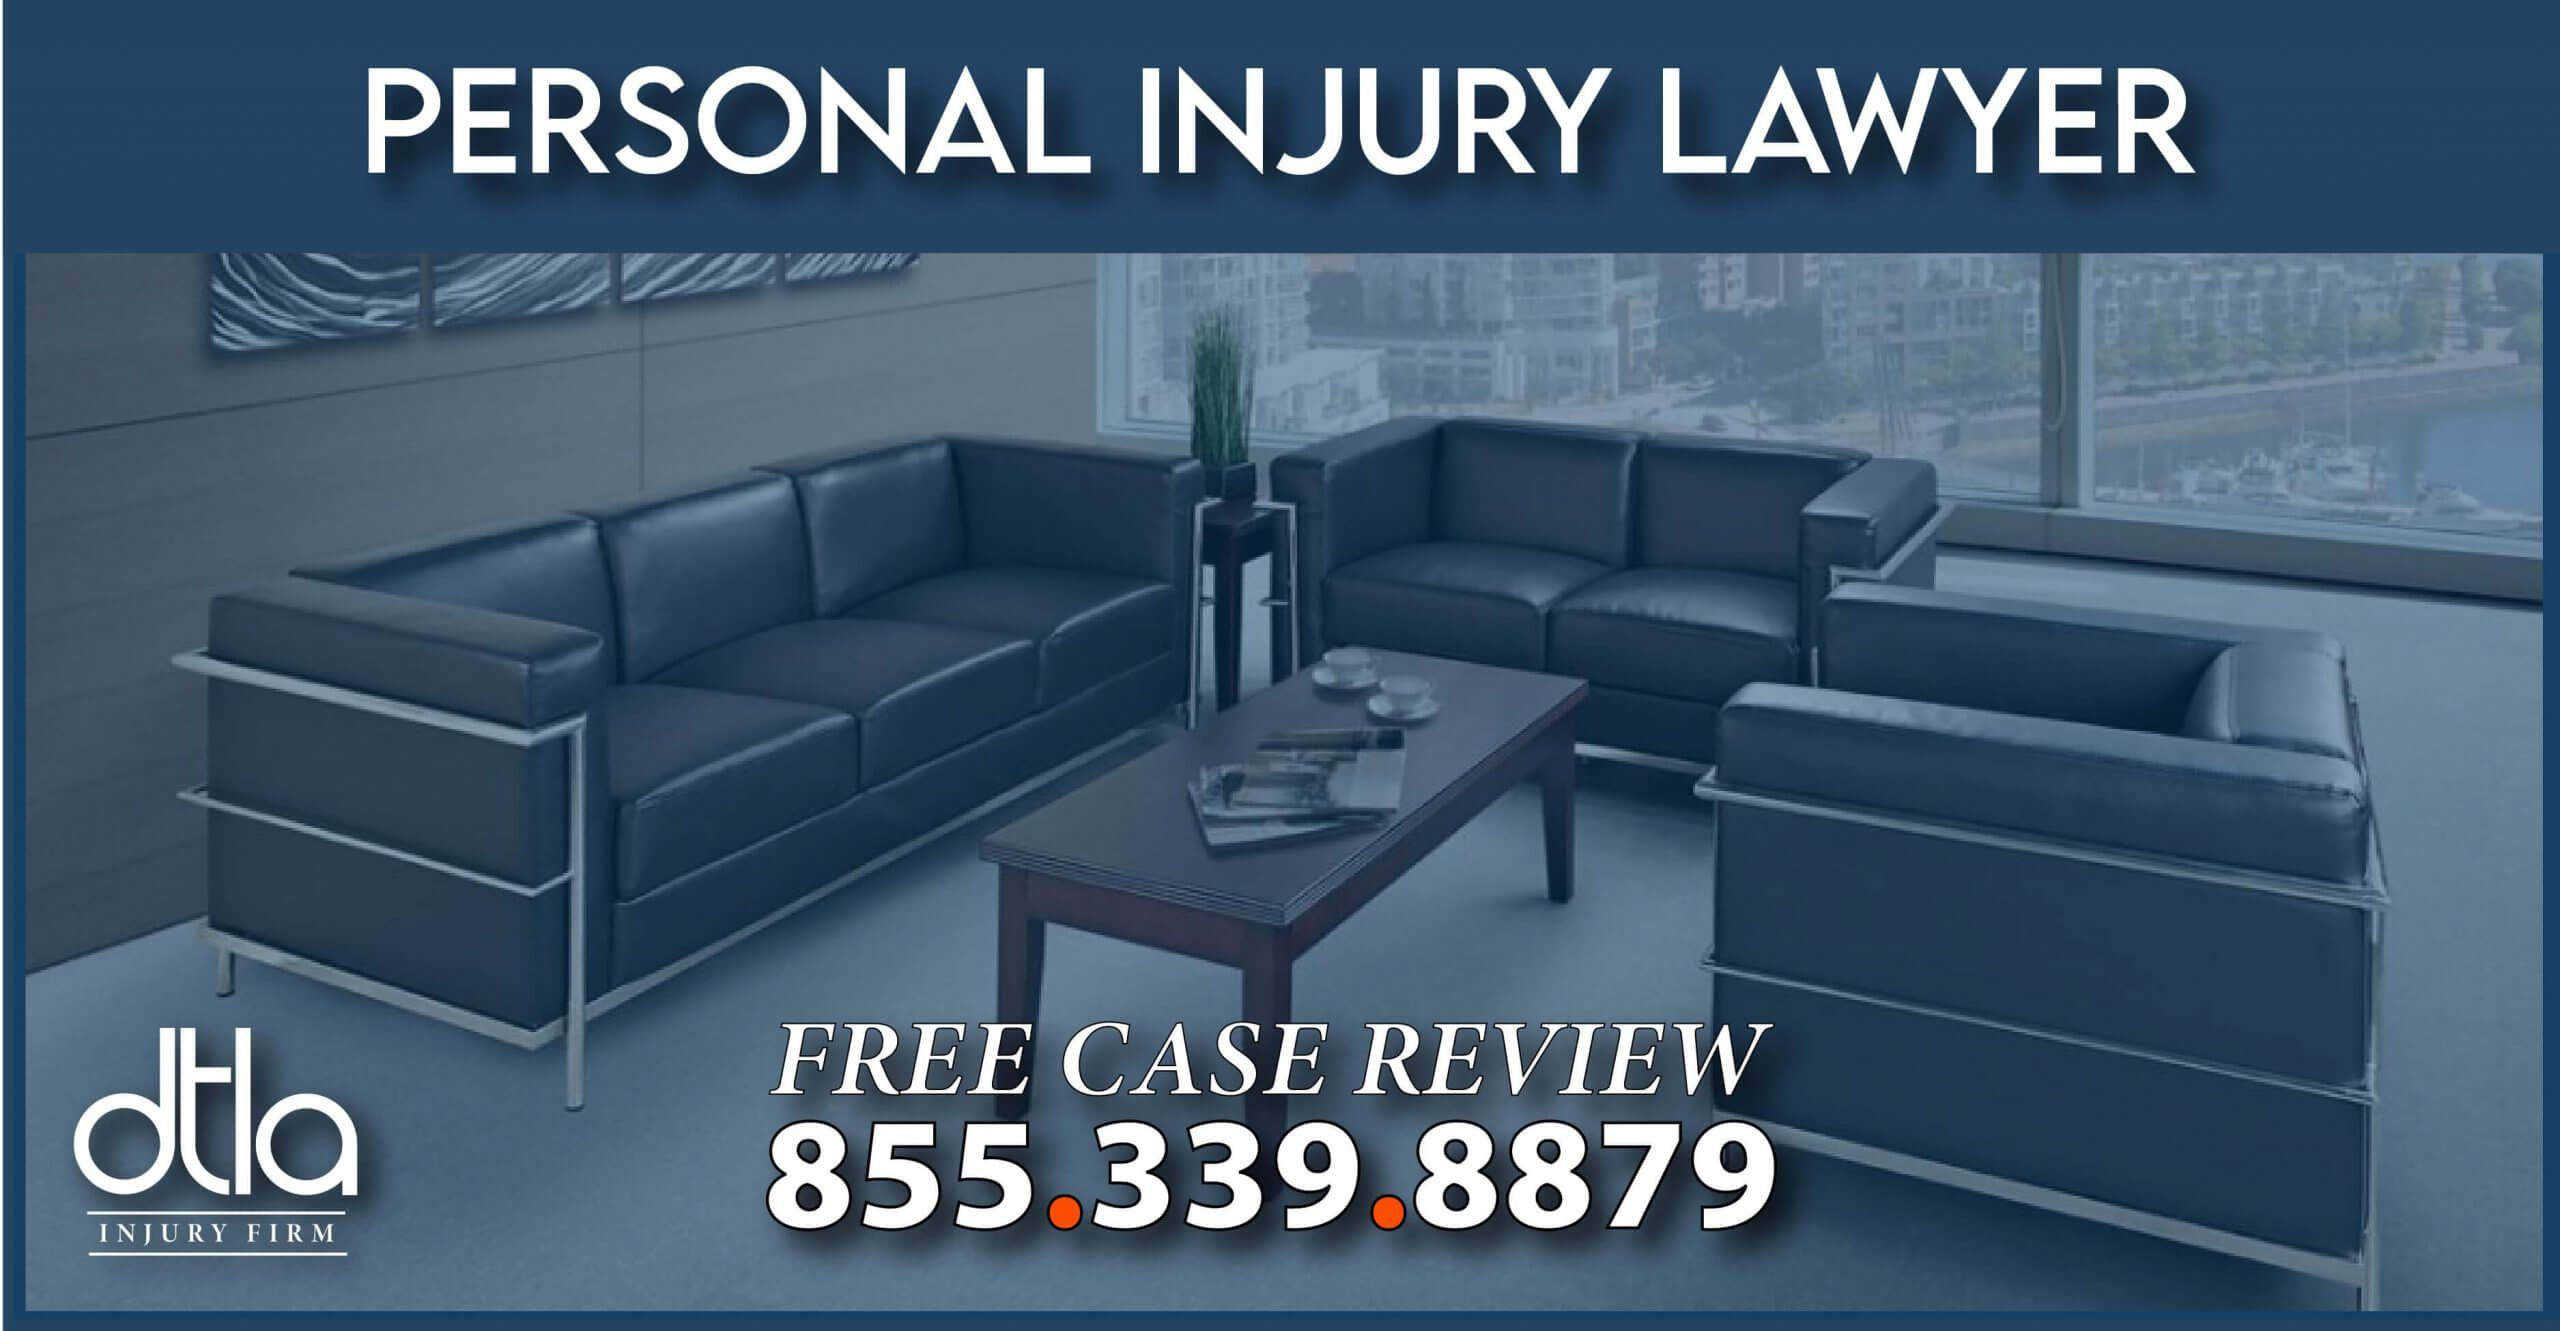 defective furniture injury attorney incident lawyer compensation sue